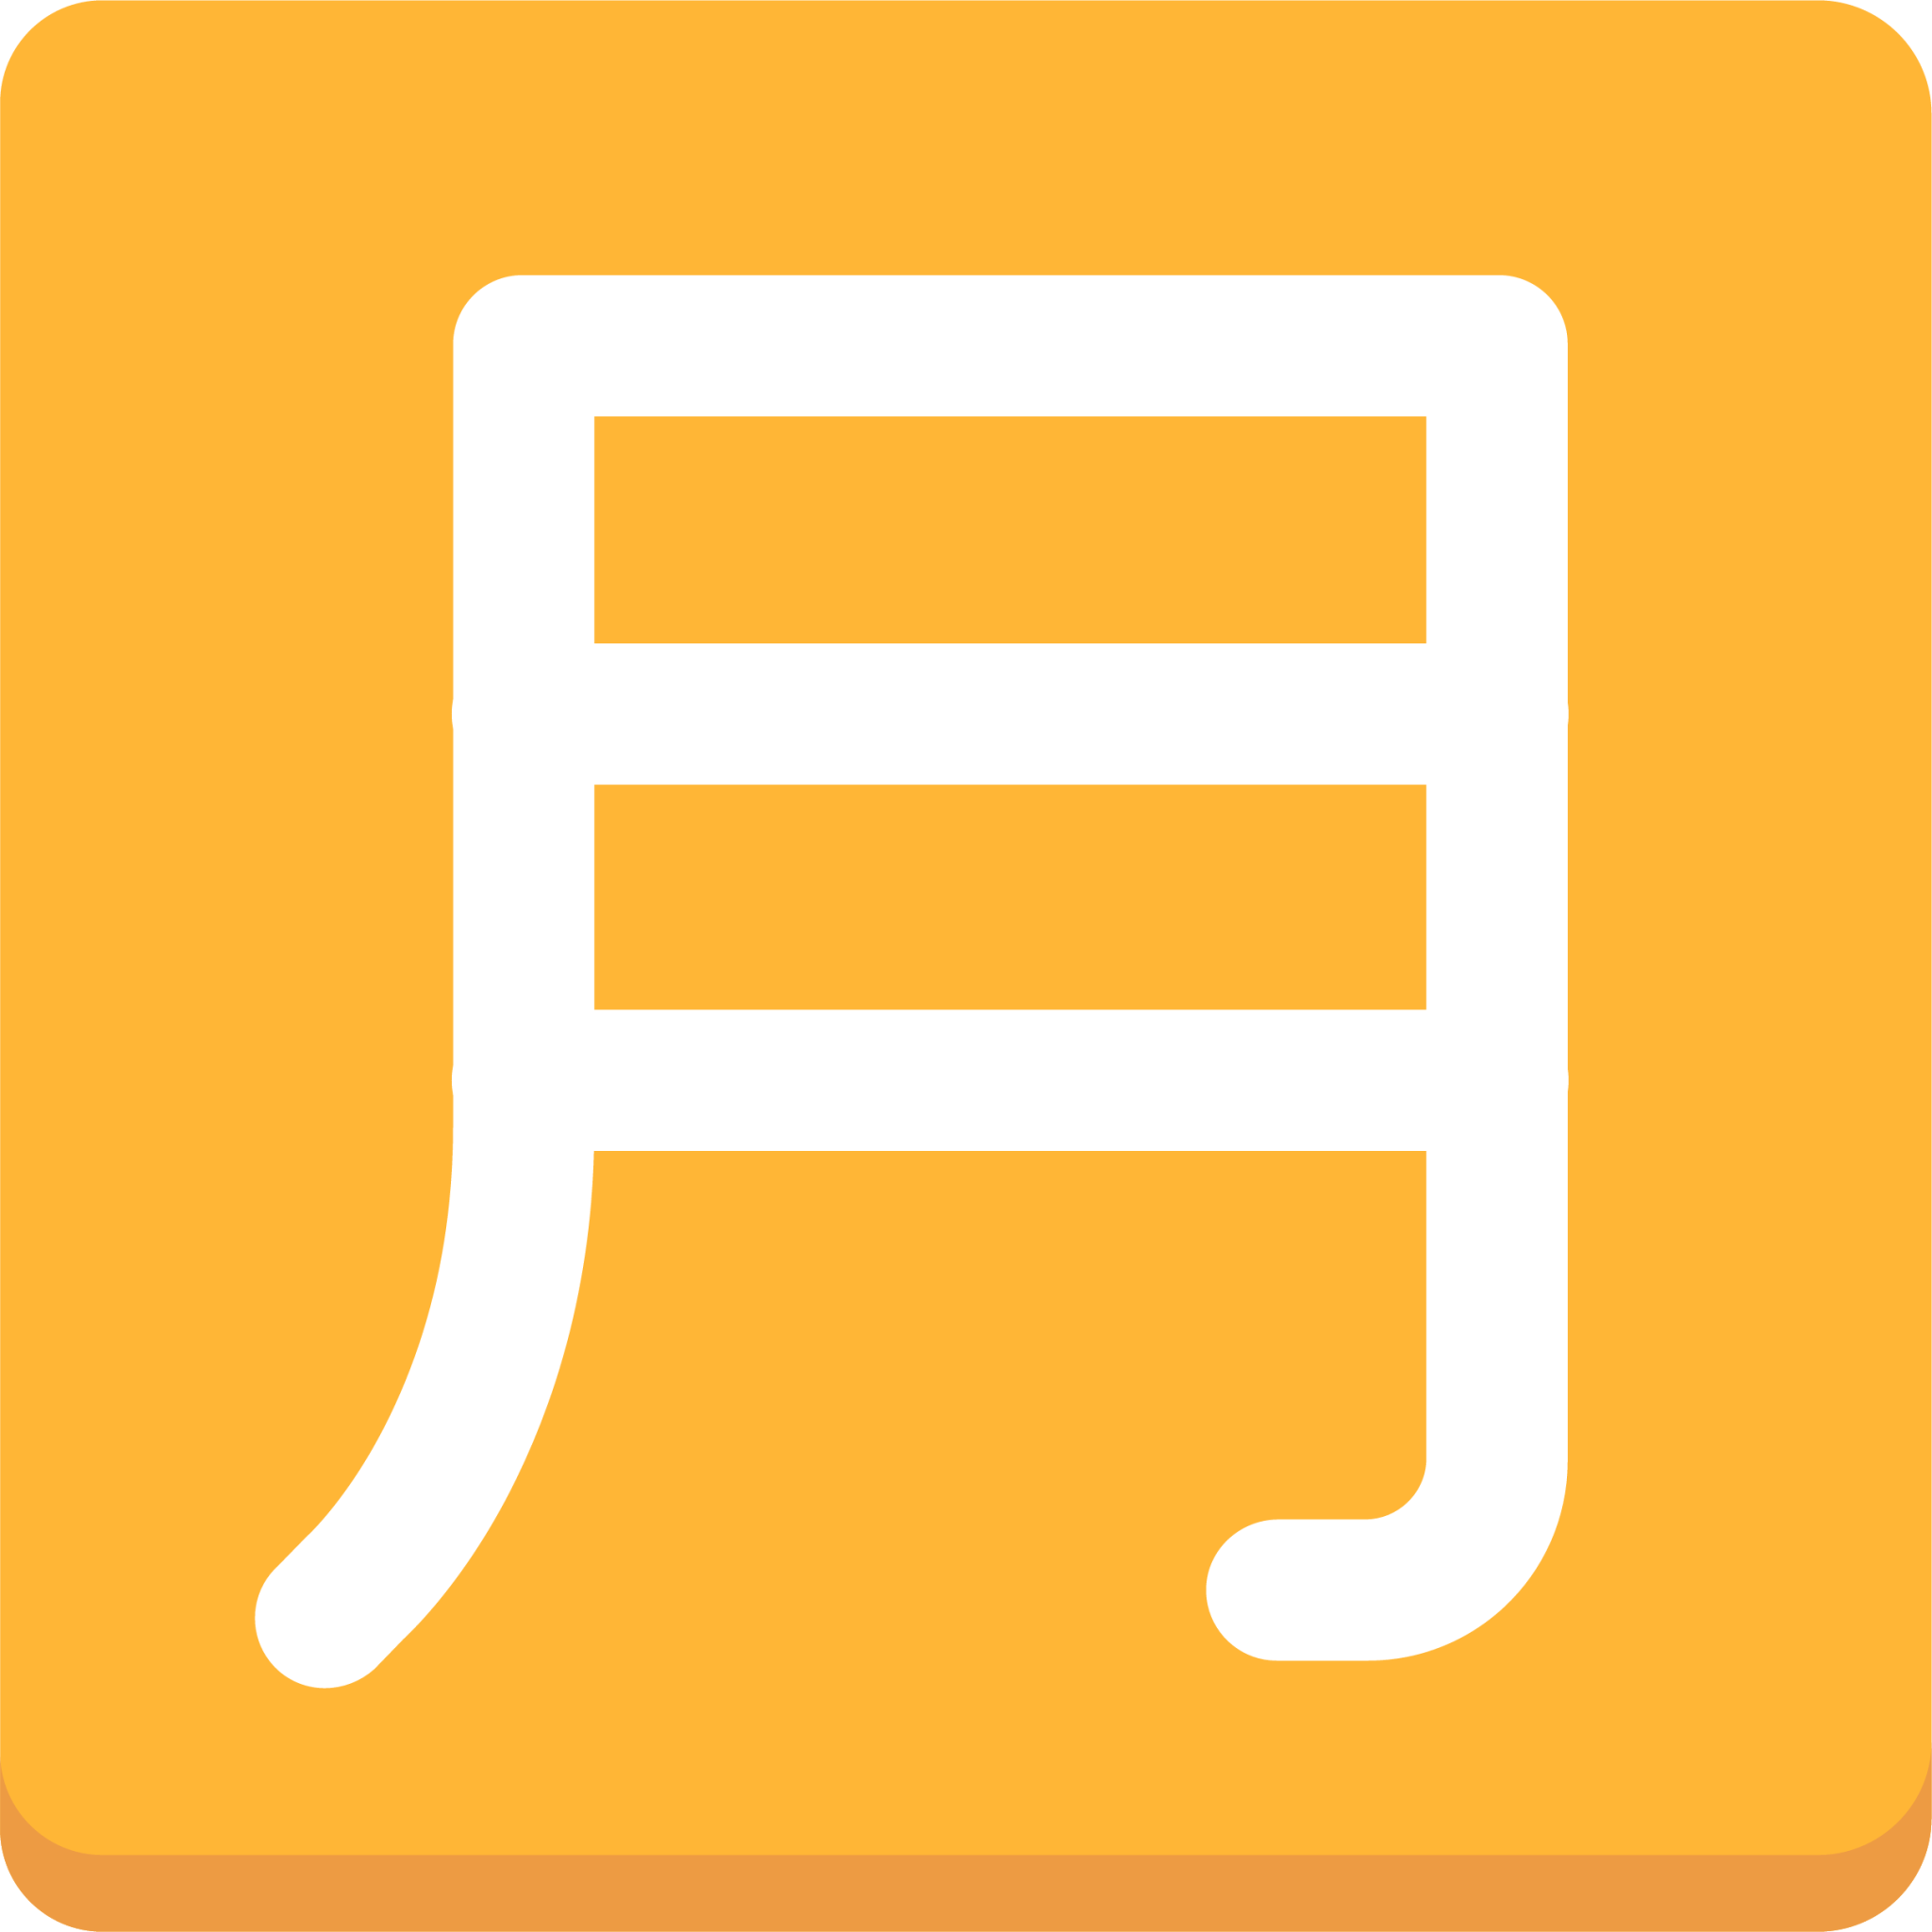 Japanese “monthly amount” button emoji